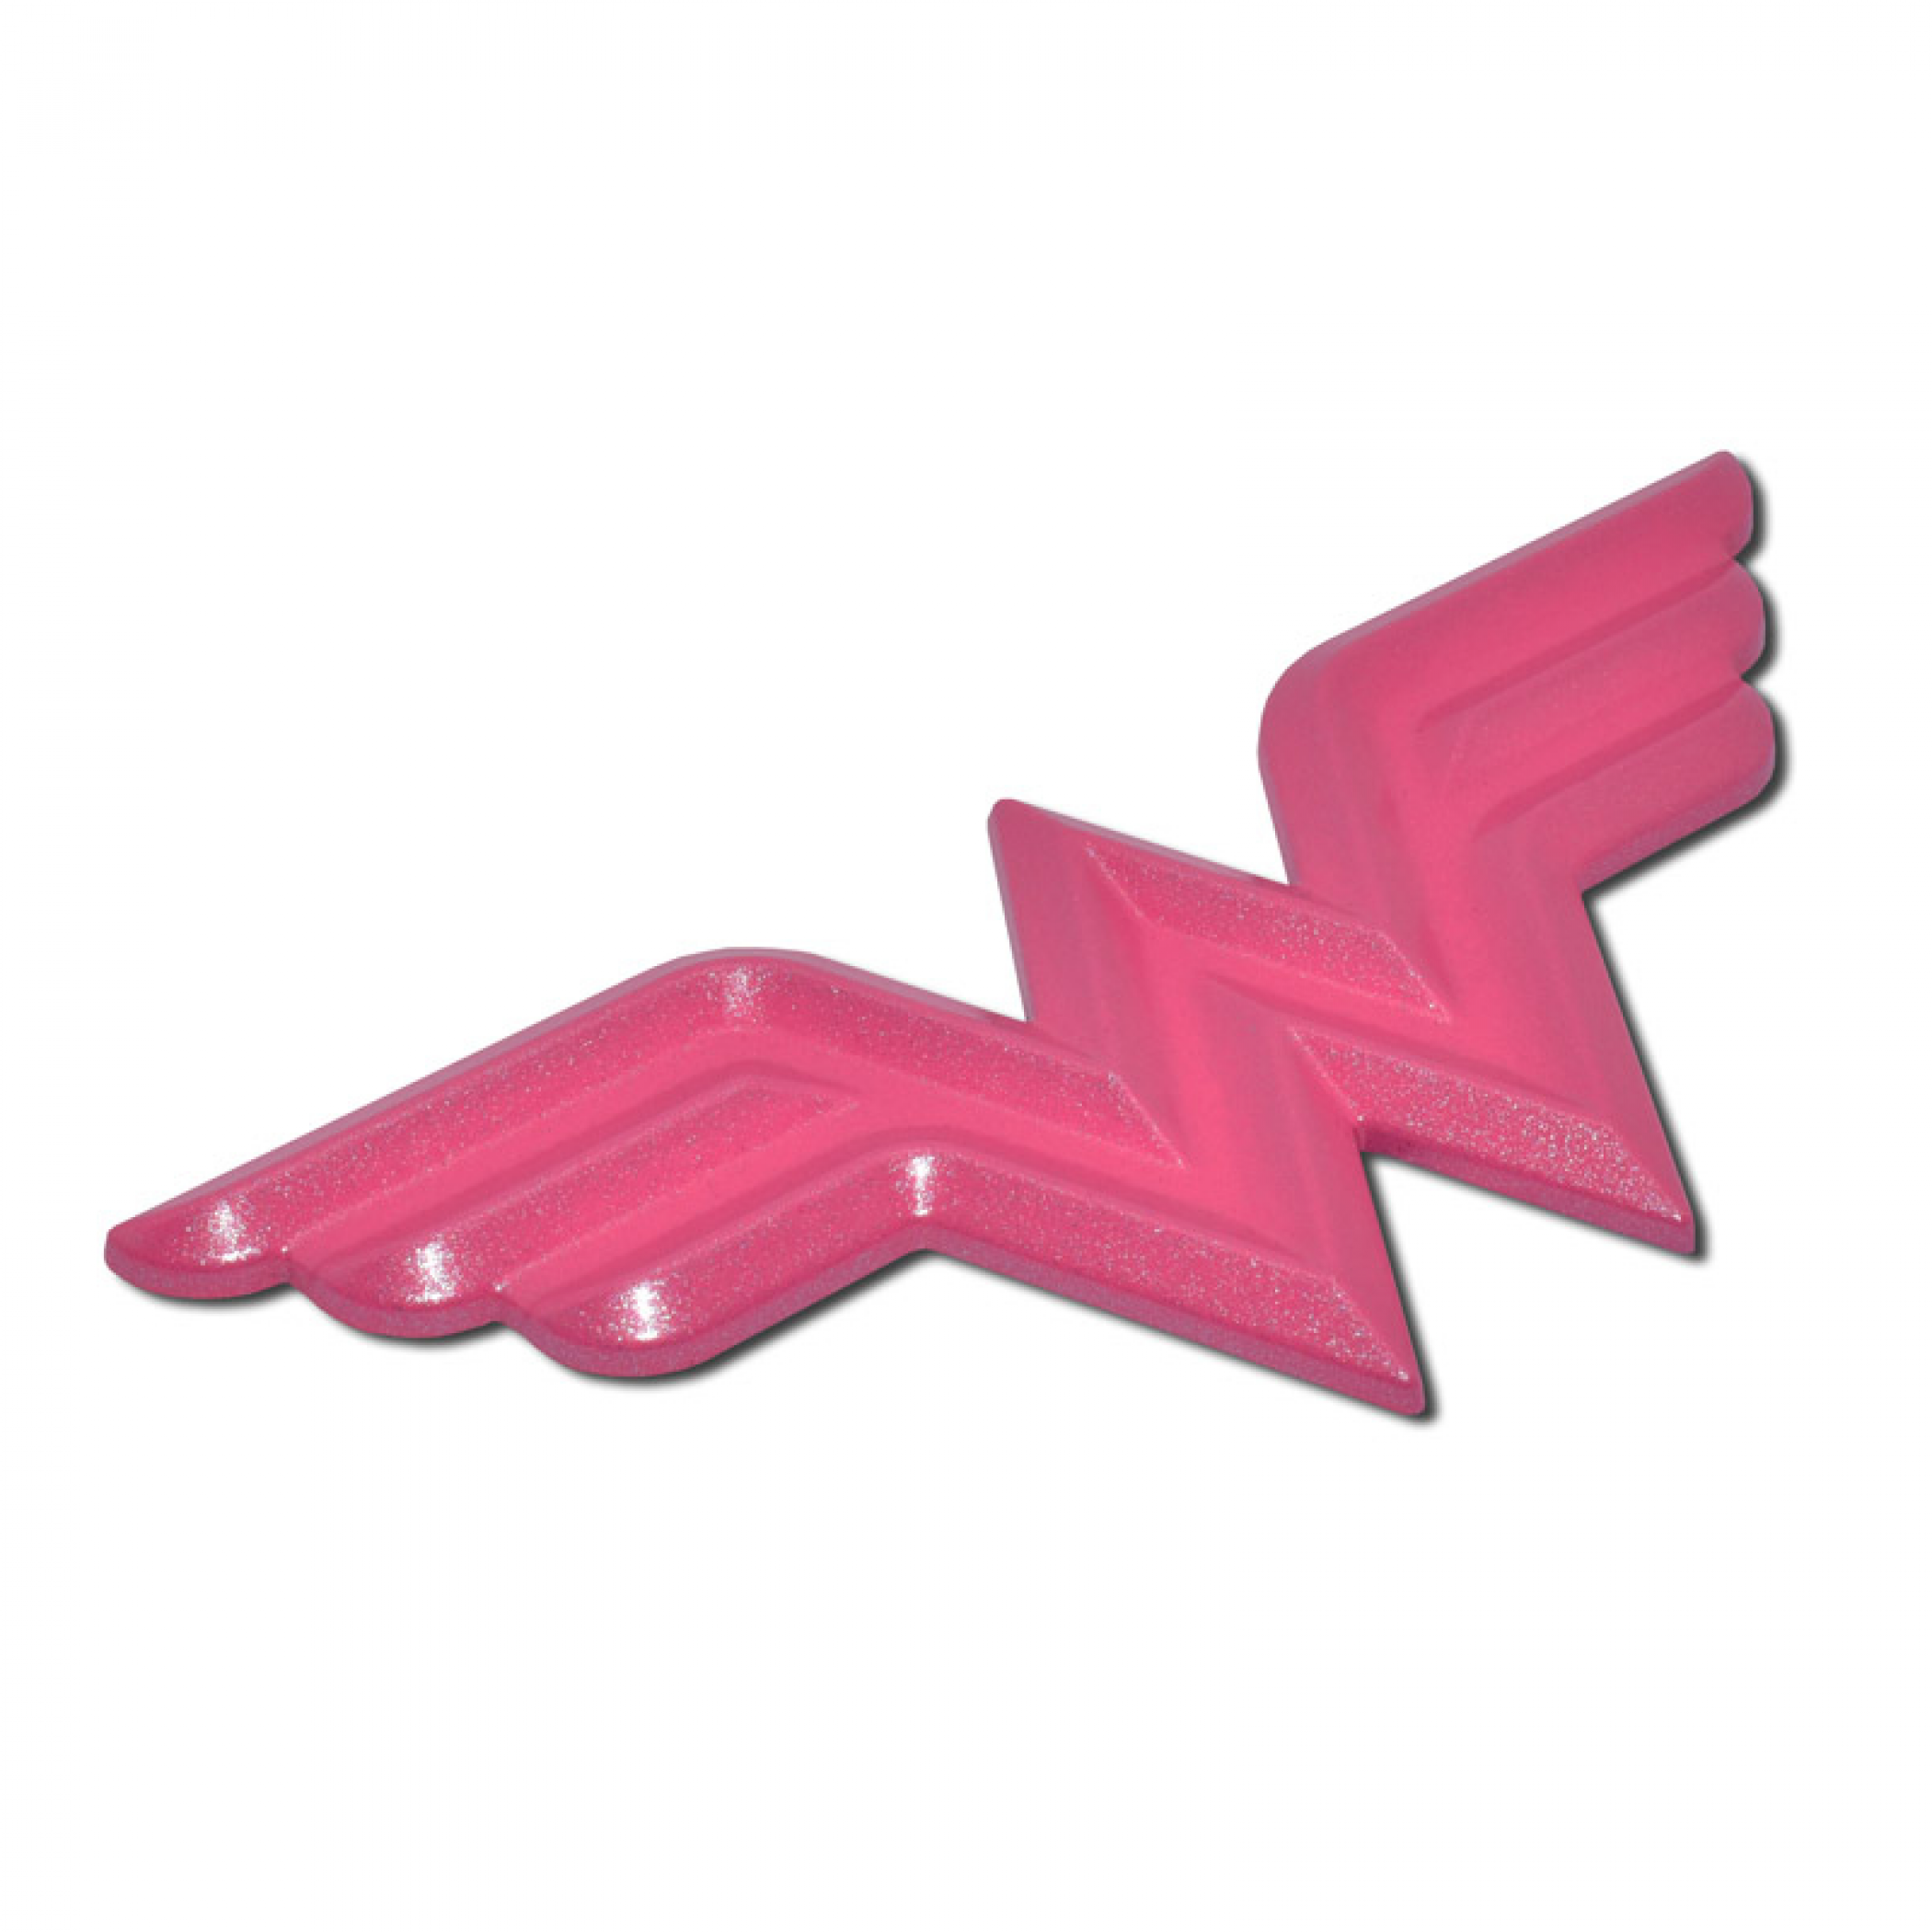 Wonder Woman Symbol Hot Pink Chrome Plated Emblem